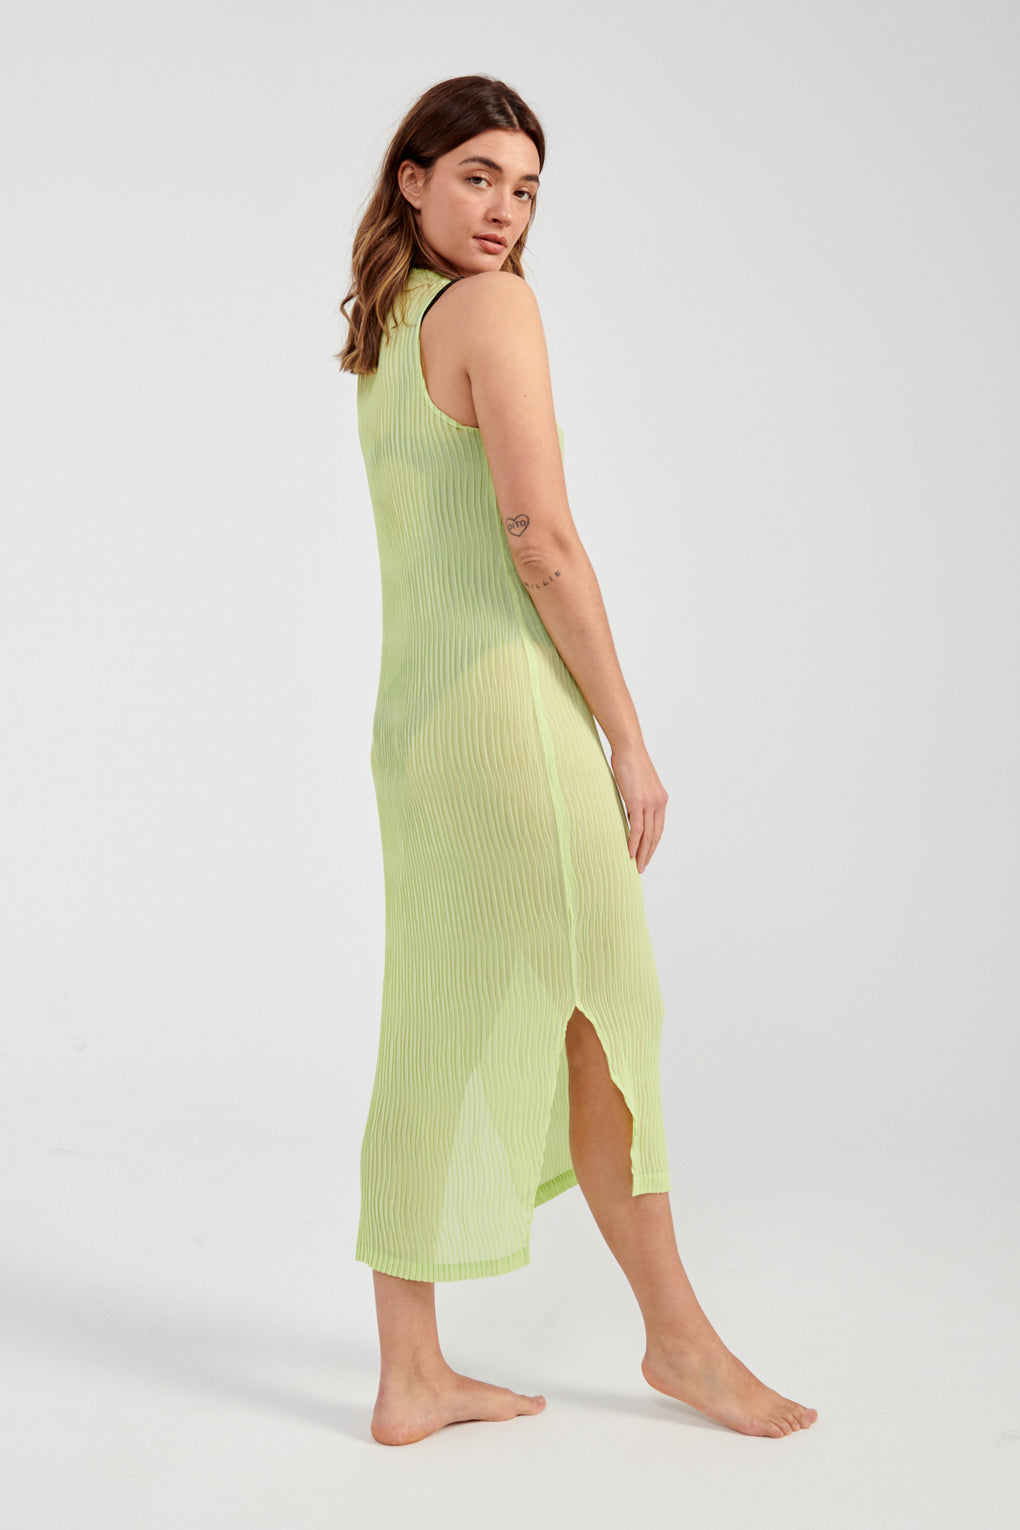 Nin Studio Wave Tank Dress green-Nin Studio sleeveless green dress-Idun-St. Paul